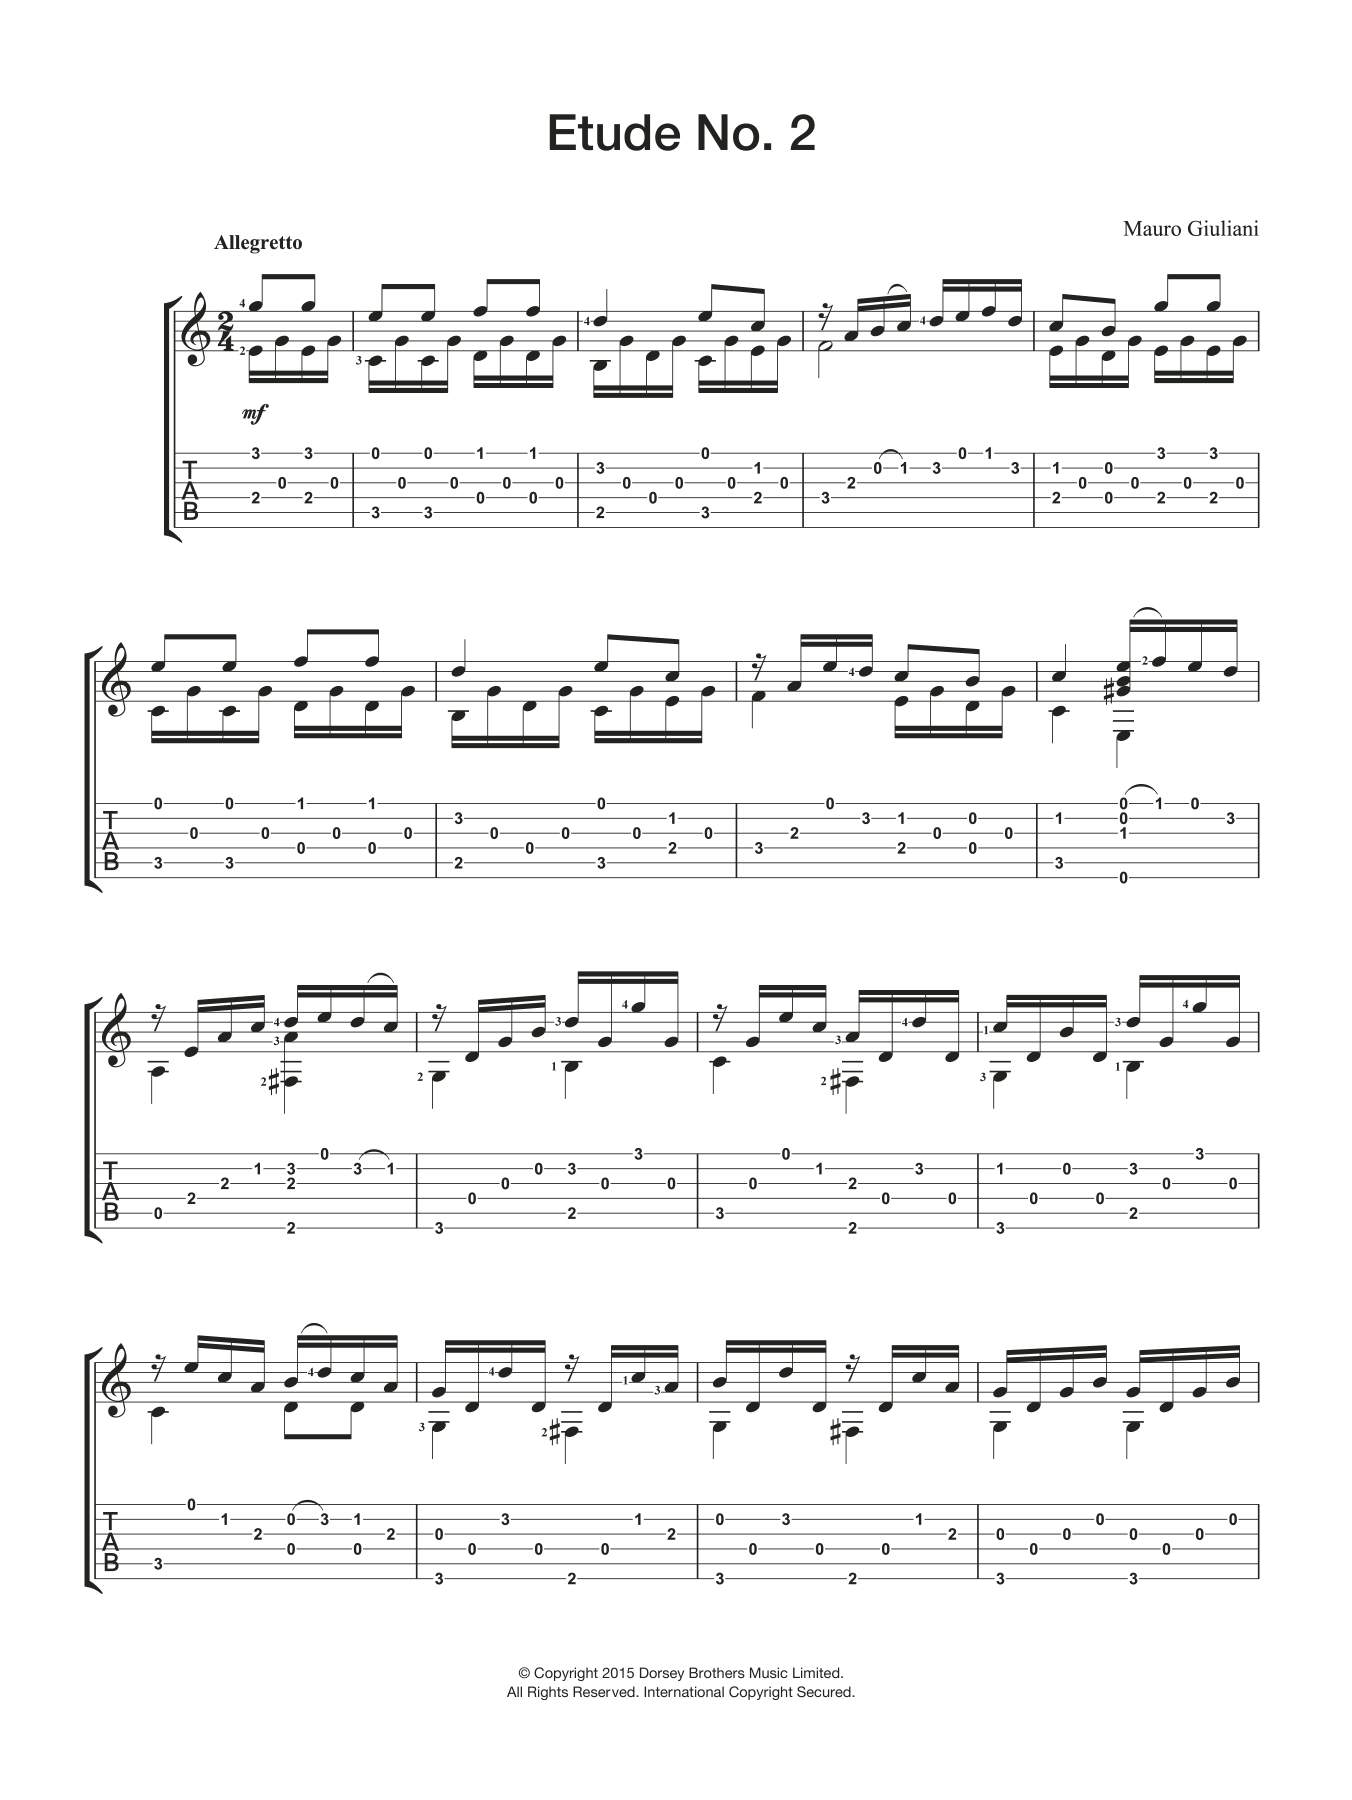 Mauro Giuliani Etude No. 2 Sheet Music Notes & Chords for Guitar - Download or Print PDF